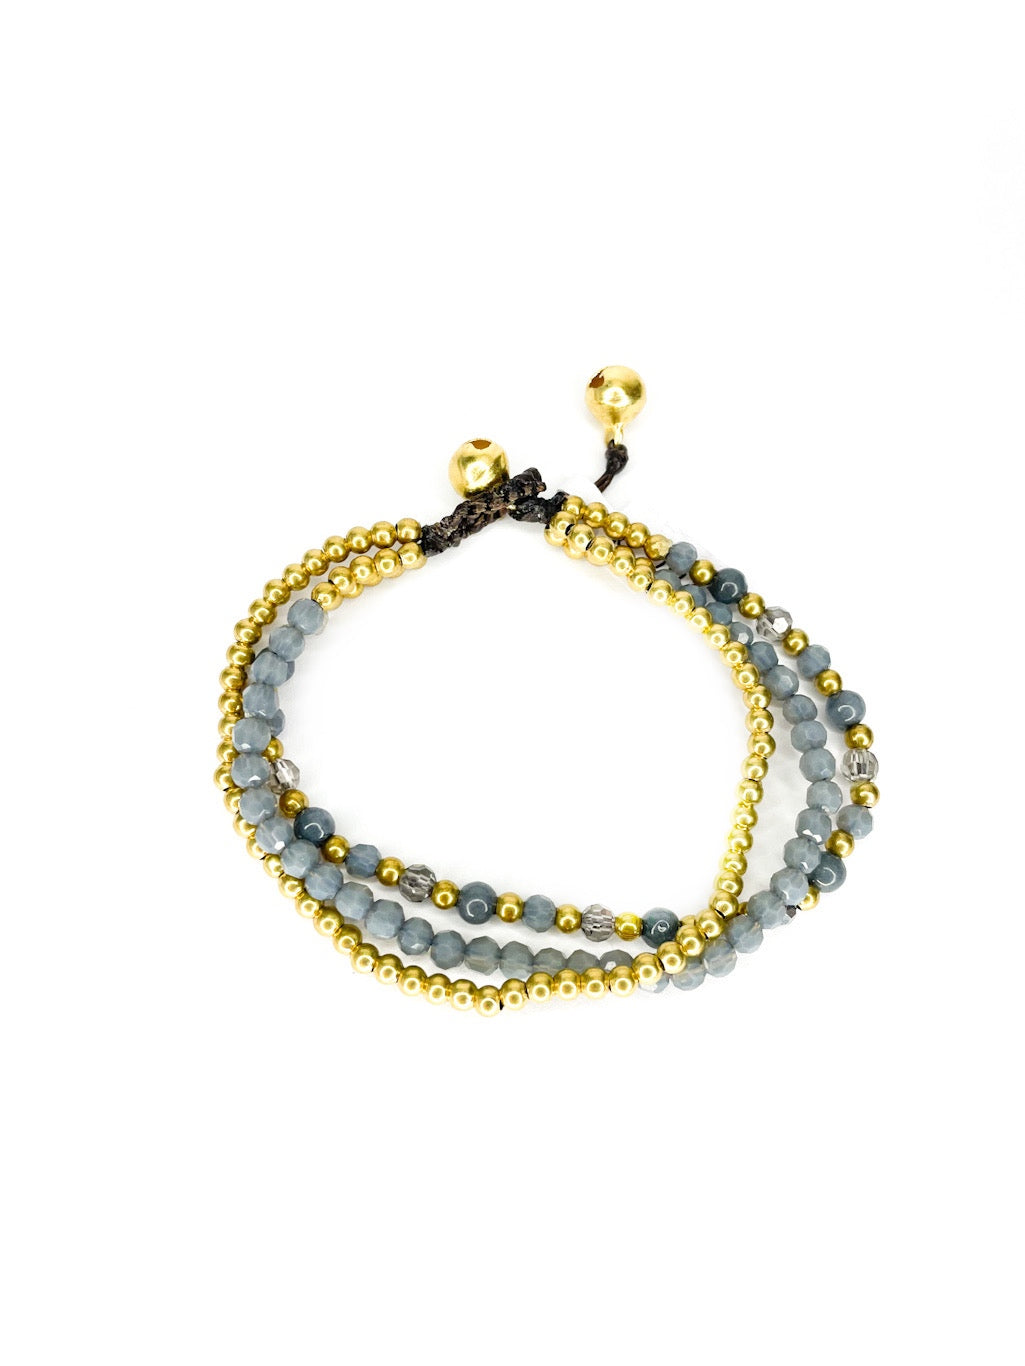 Three strand stone and brass beaded bracelet - various bracelet